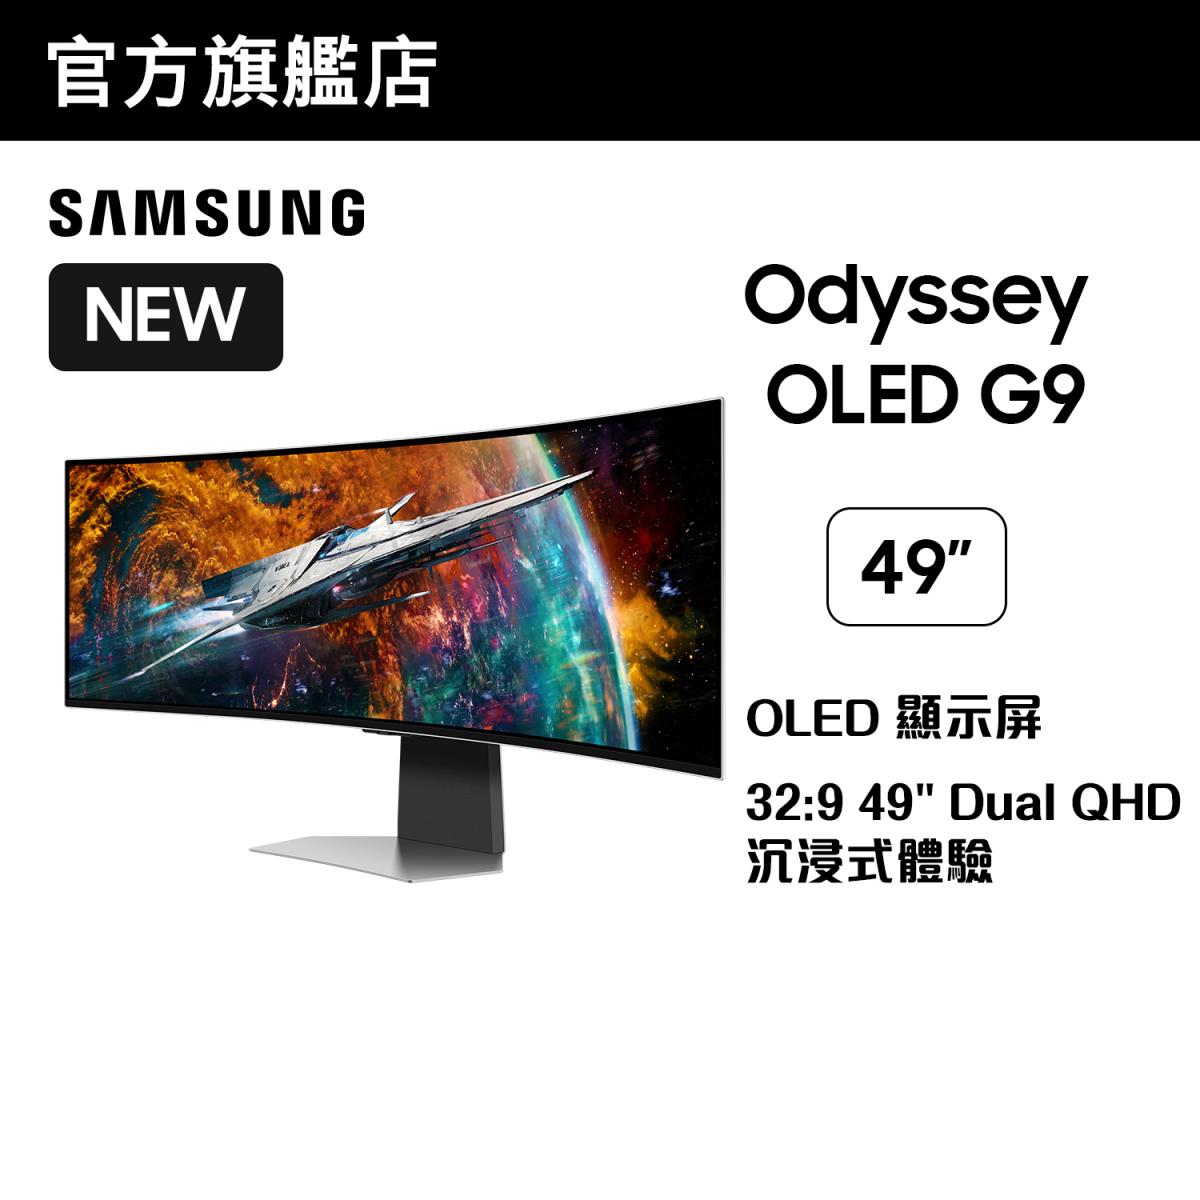 49" Odyssey OLED G9 曲面電競顯示器 (240Hz) LS49CG954SCXXK 49G9